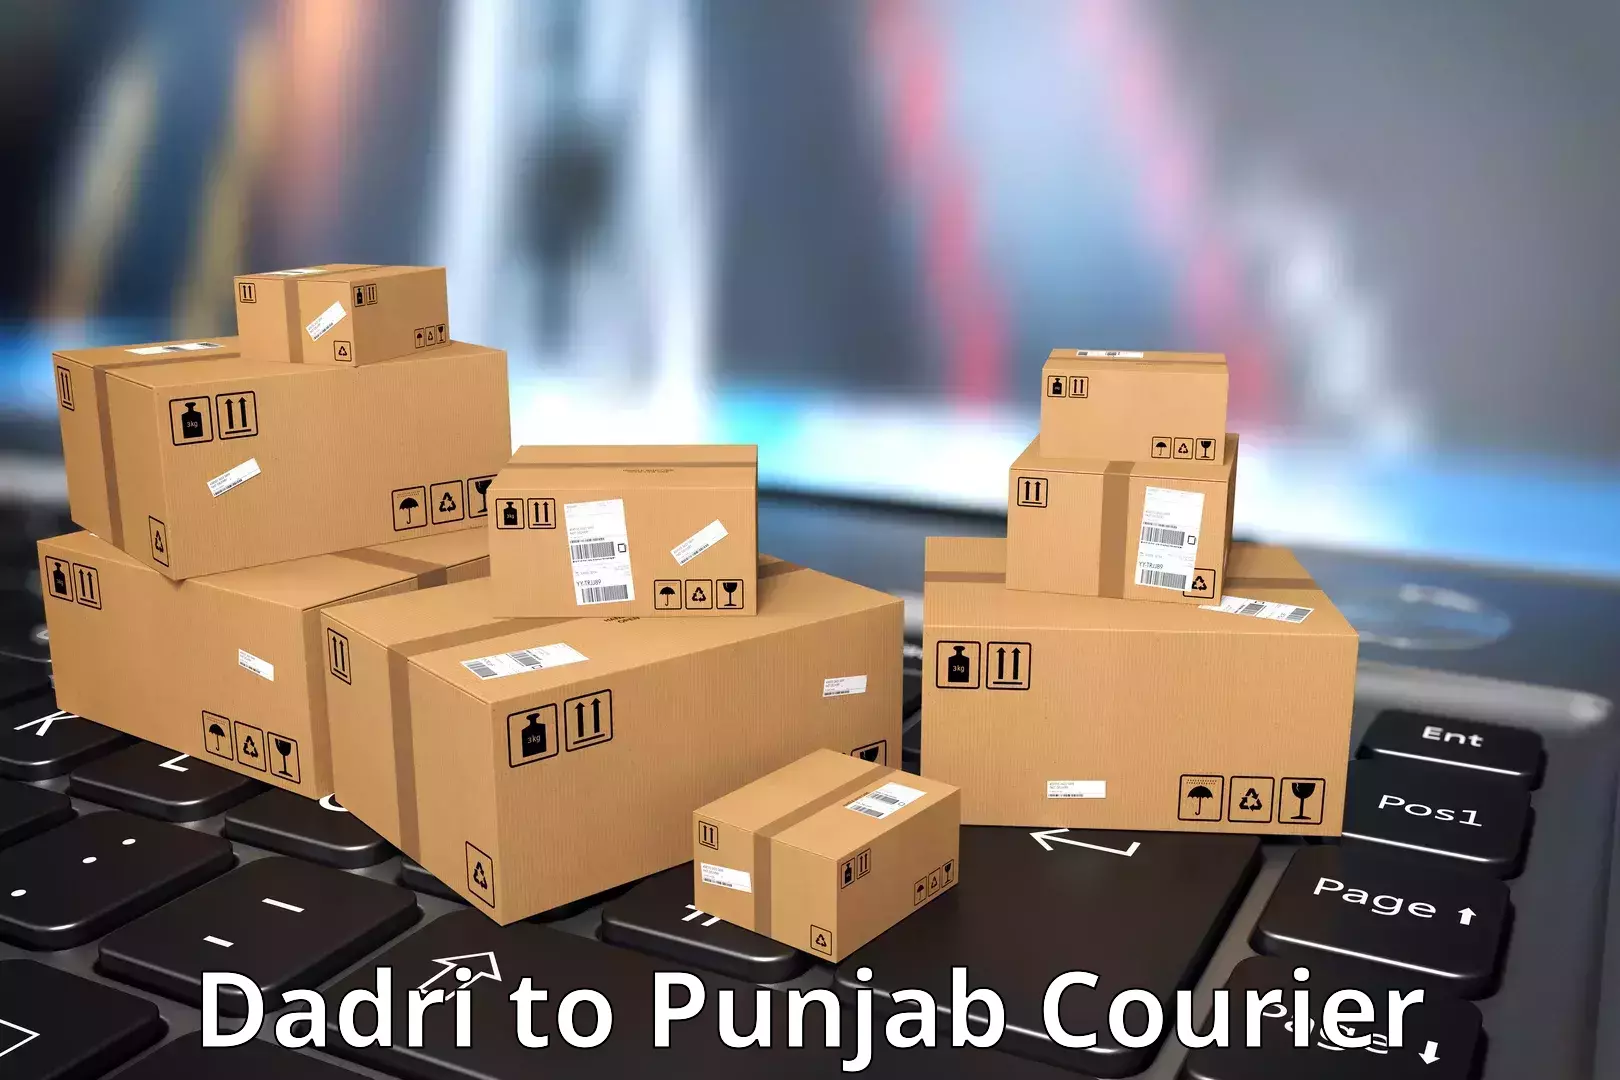 Courier service comparison Dadri to Punjab